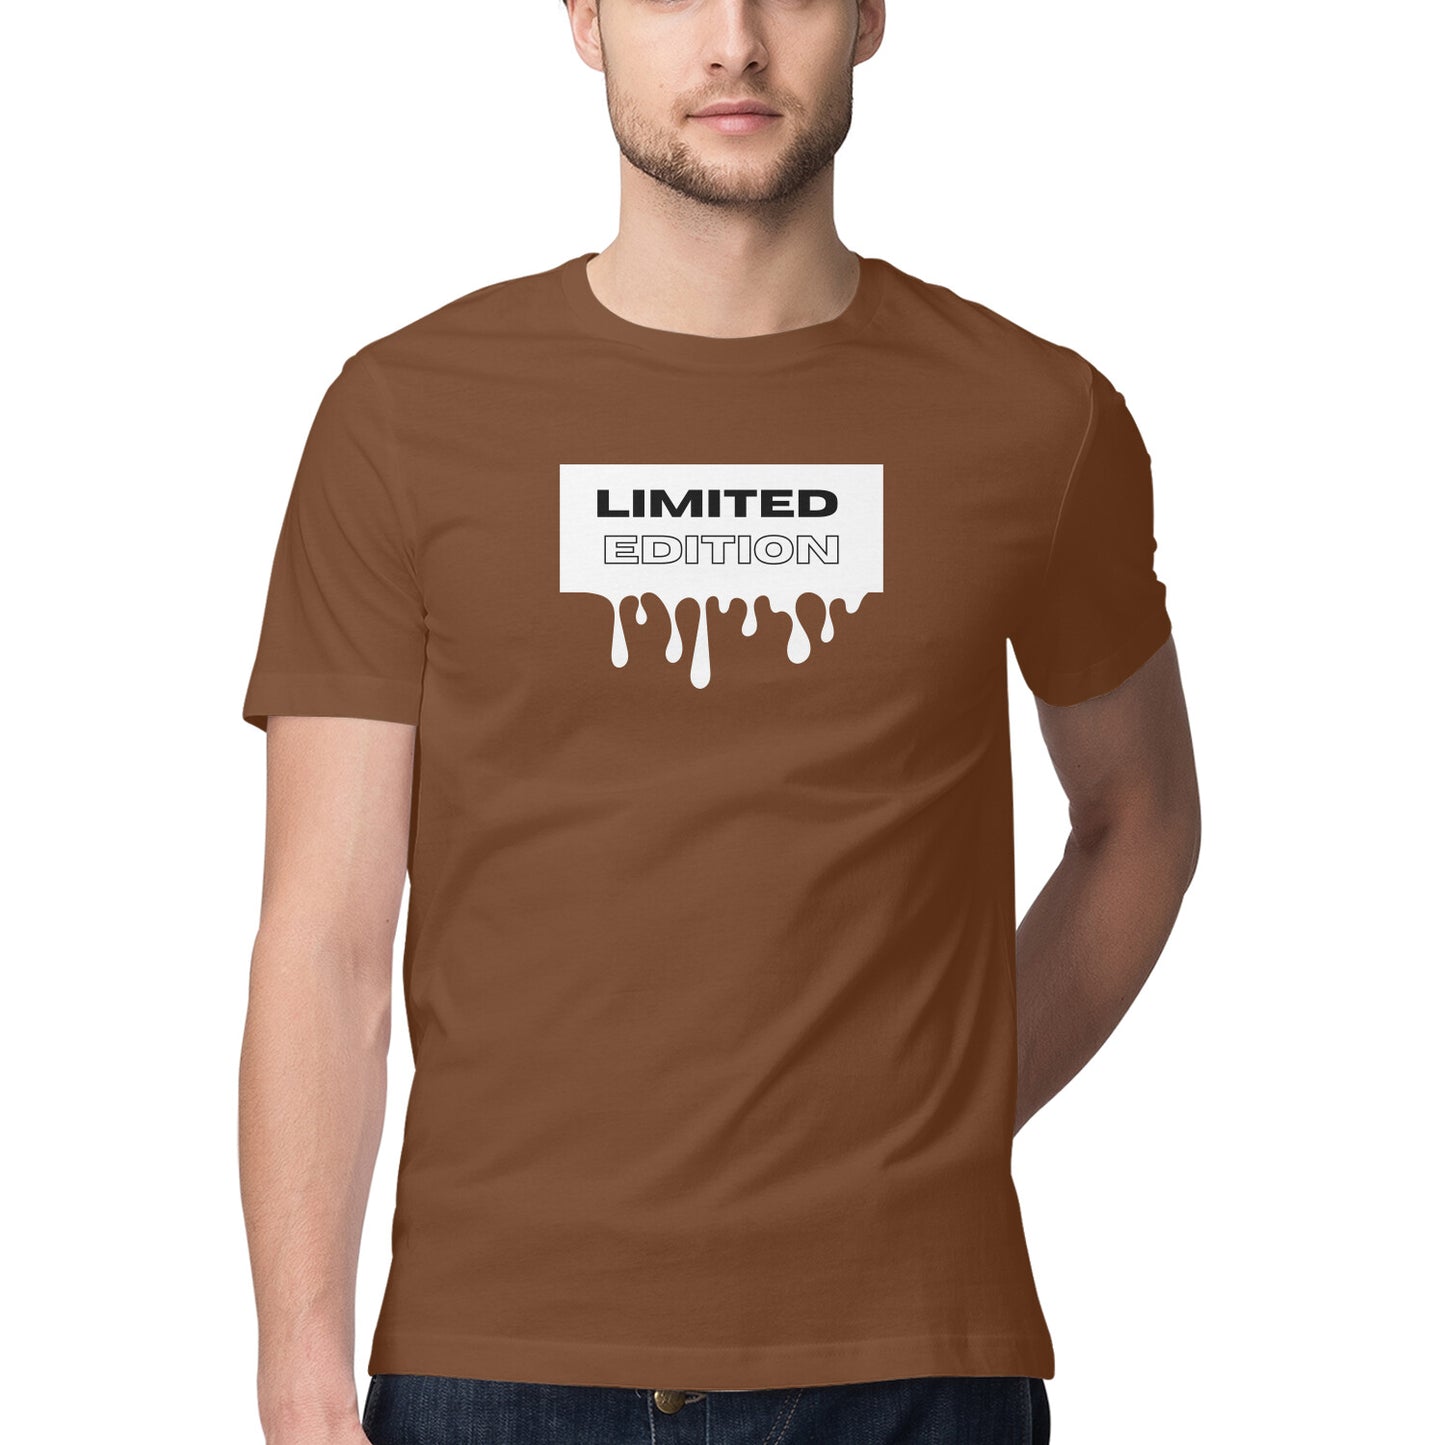 Limited Edition - Unisex Tshirt